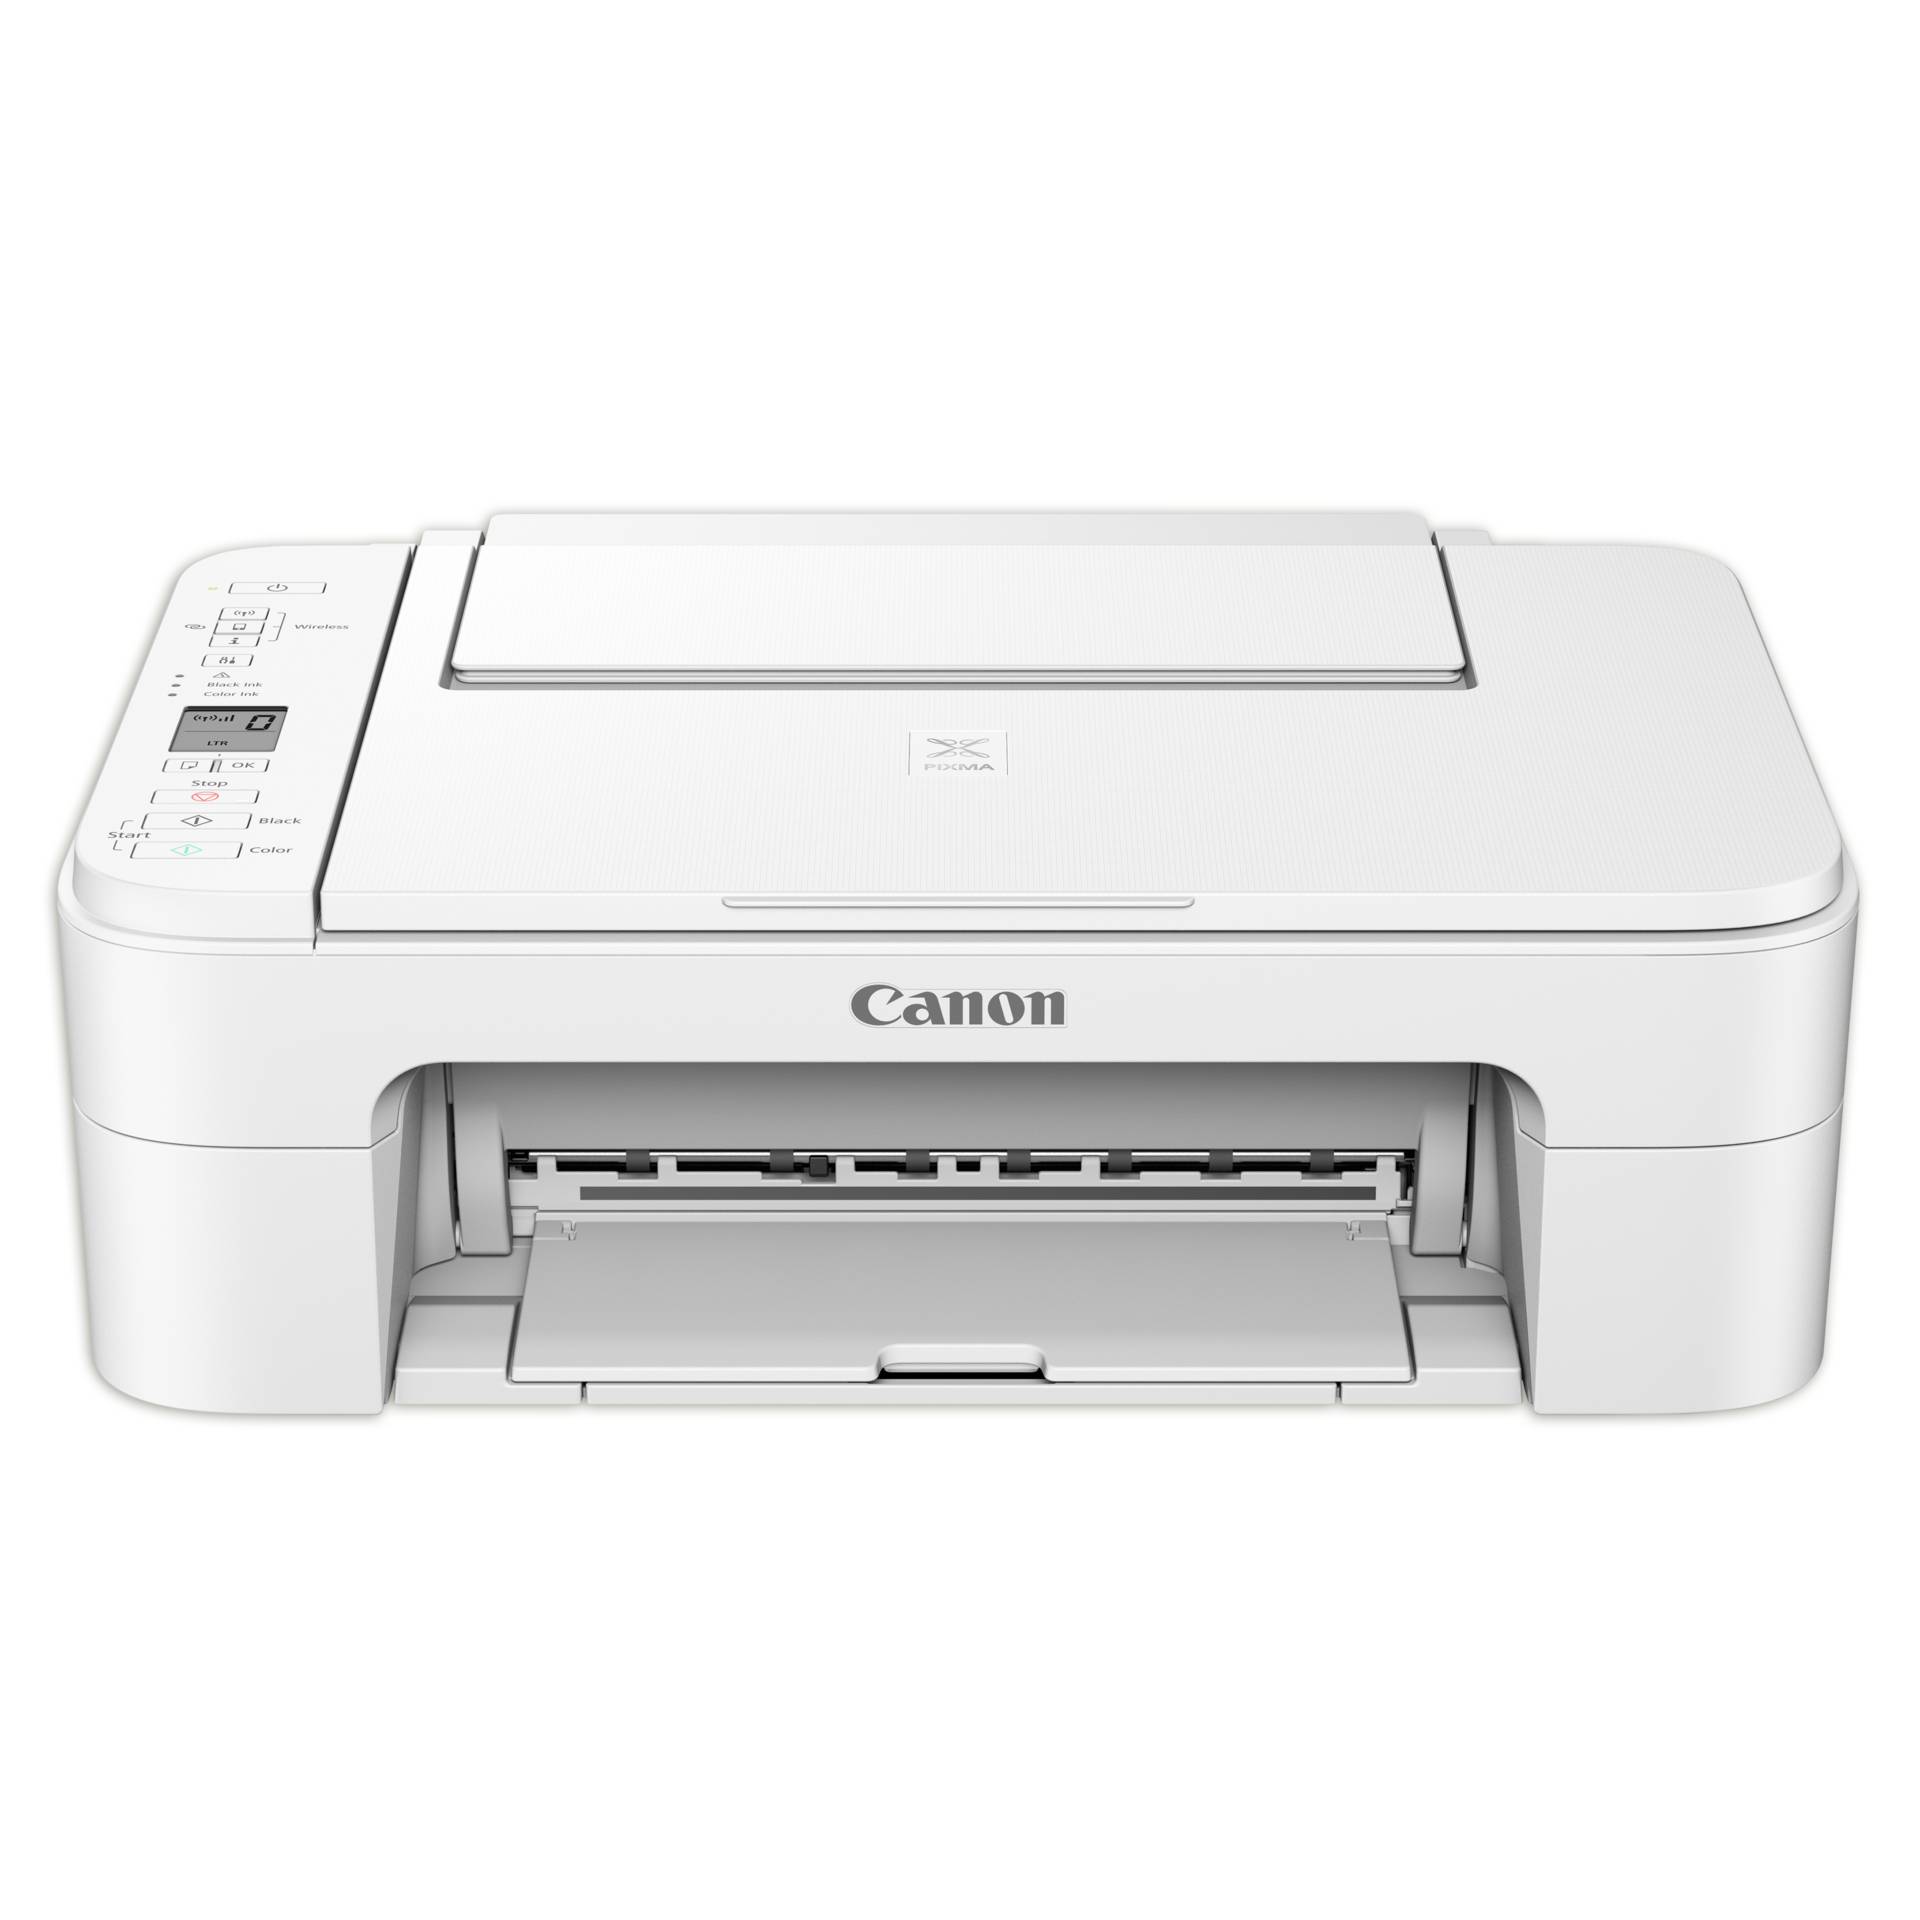 Canon PIXMA TS3351 weiß, WLAN, Tinte, mehrfarbig-Multifunktionsgerät, Drucker/Scanner/Kopierer